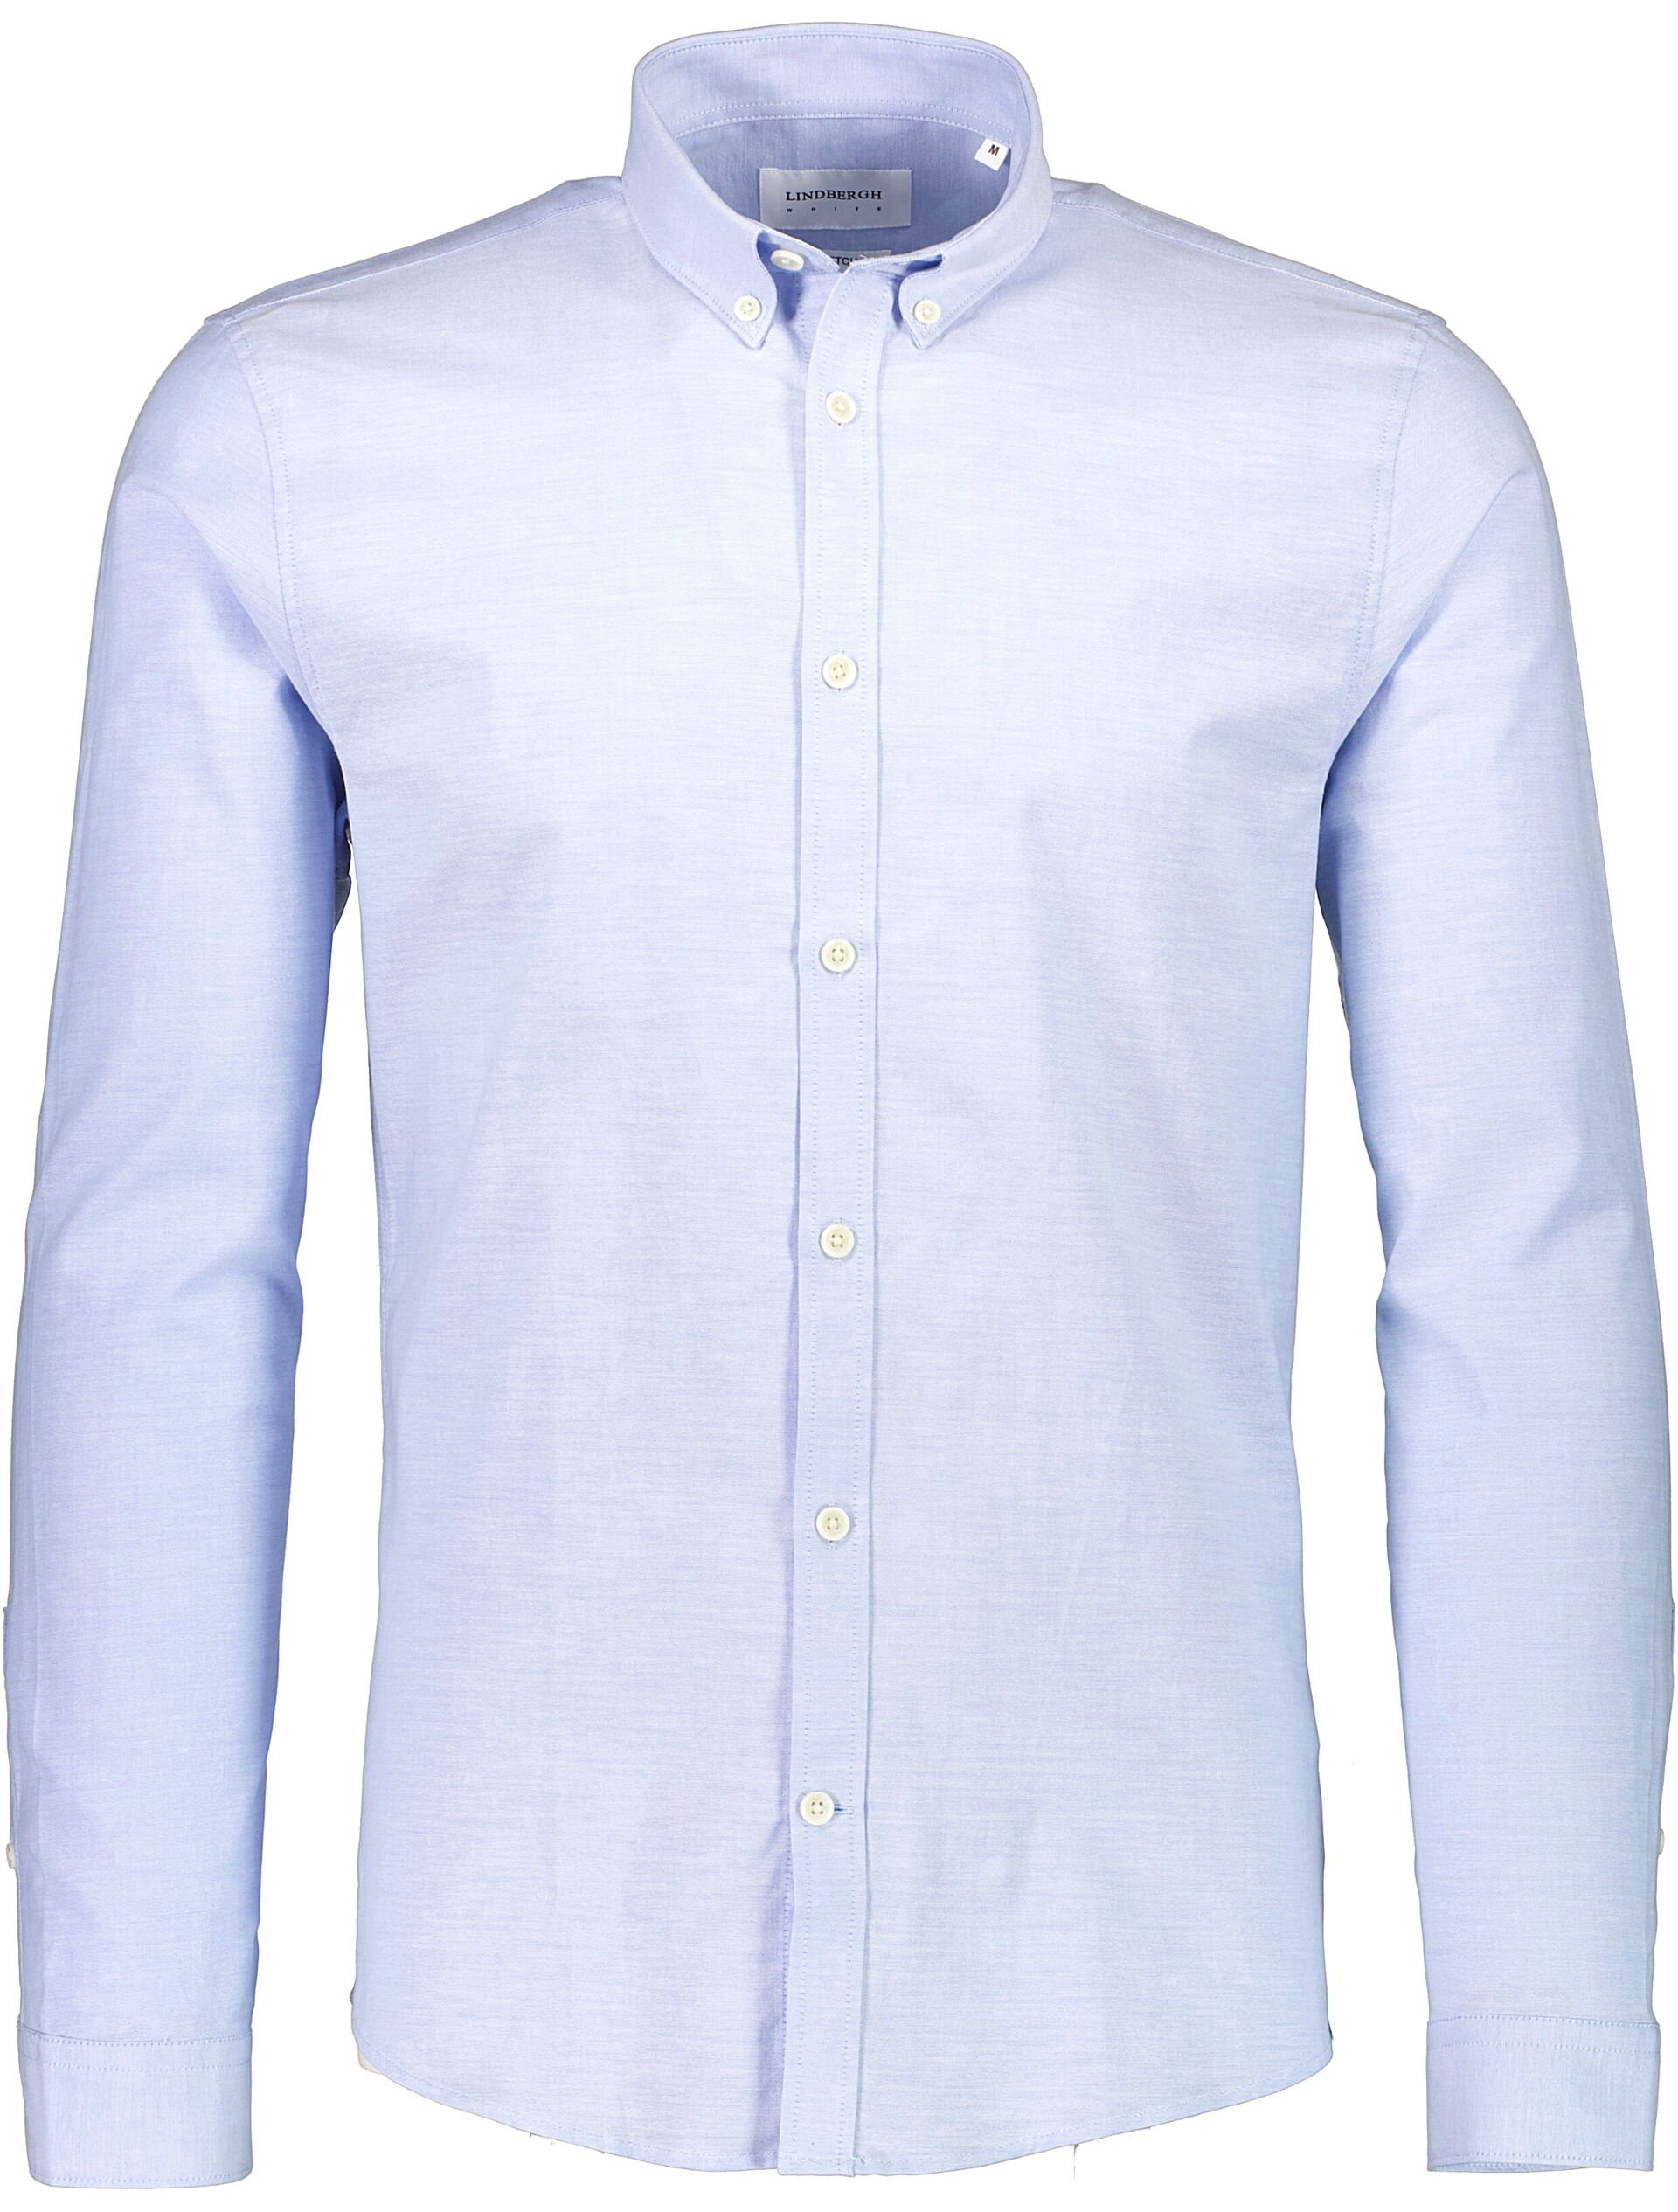 Lindbergh Oxford shirt blue / light blue